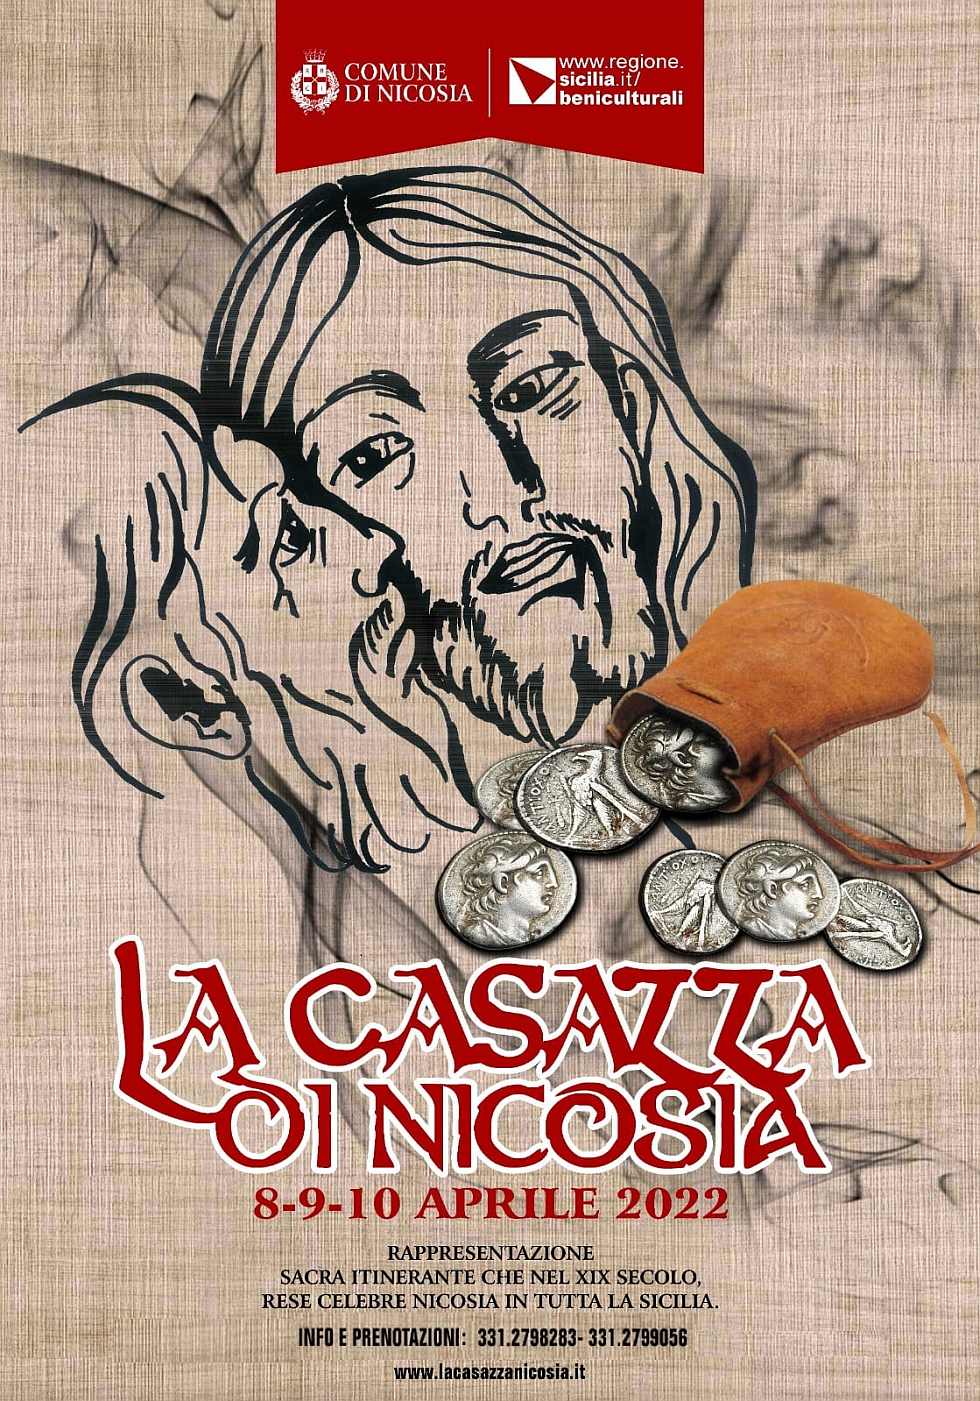 Nicosia (EN)
"La Casazza"
8-9-10 Aprile 2022